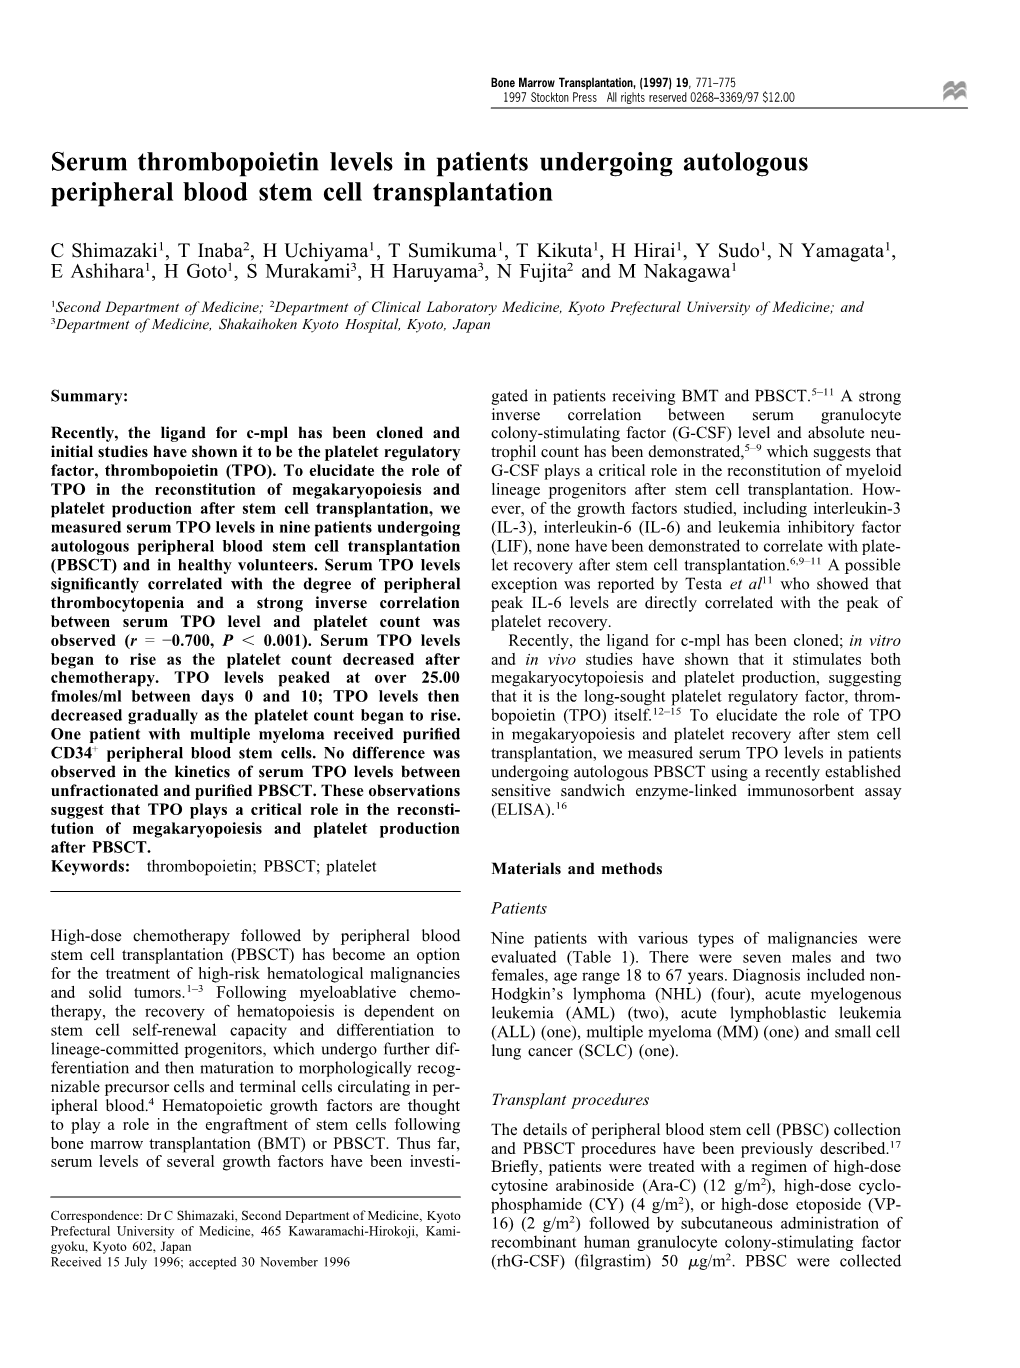 Serum Thrombopoietin Levels in Patients Undergoing Autologous Peripheral Blood Stem Cell Transplantation